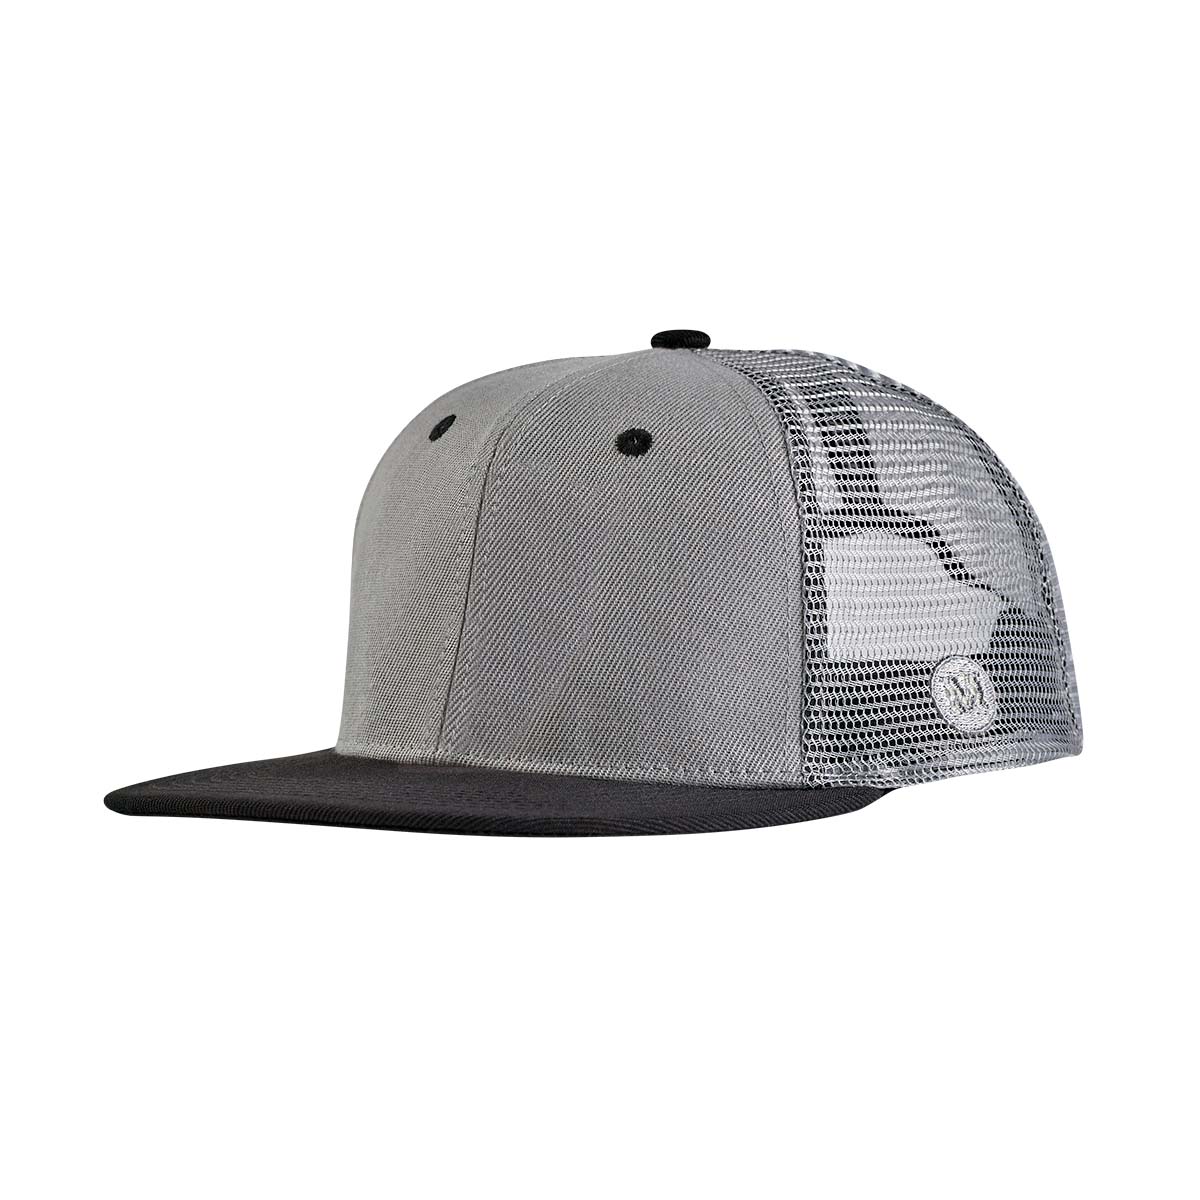 Blank Trucker Hats - Grey - Stylish & Extra-Large Fit